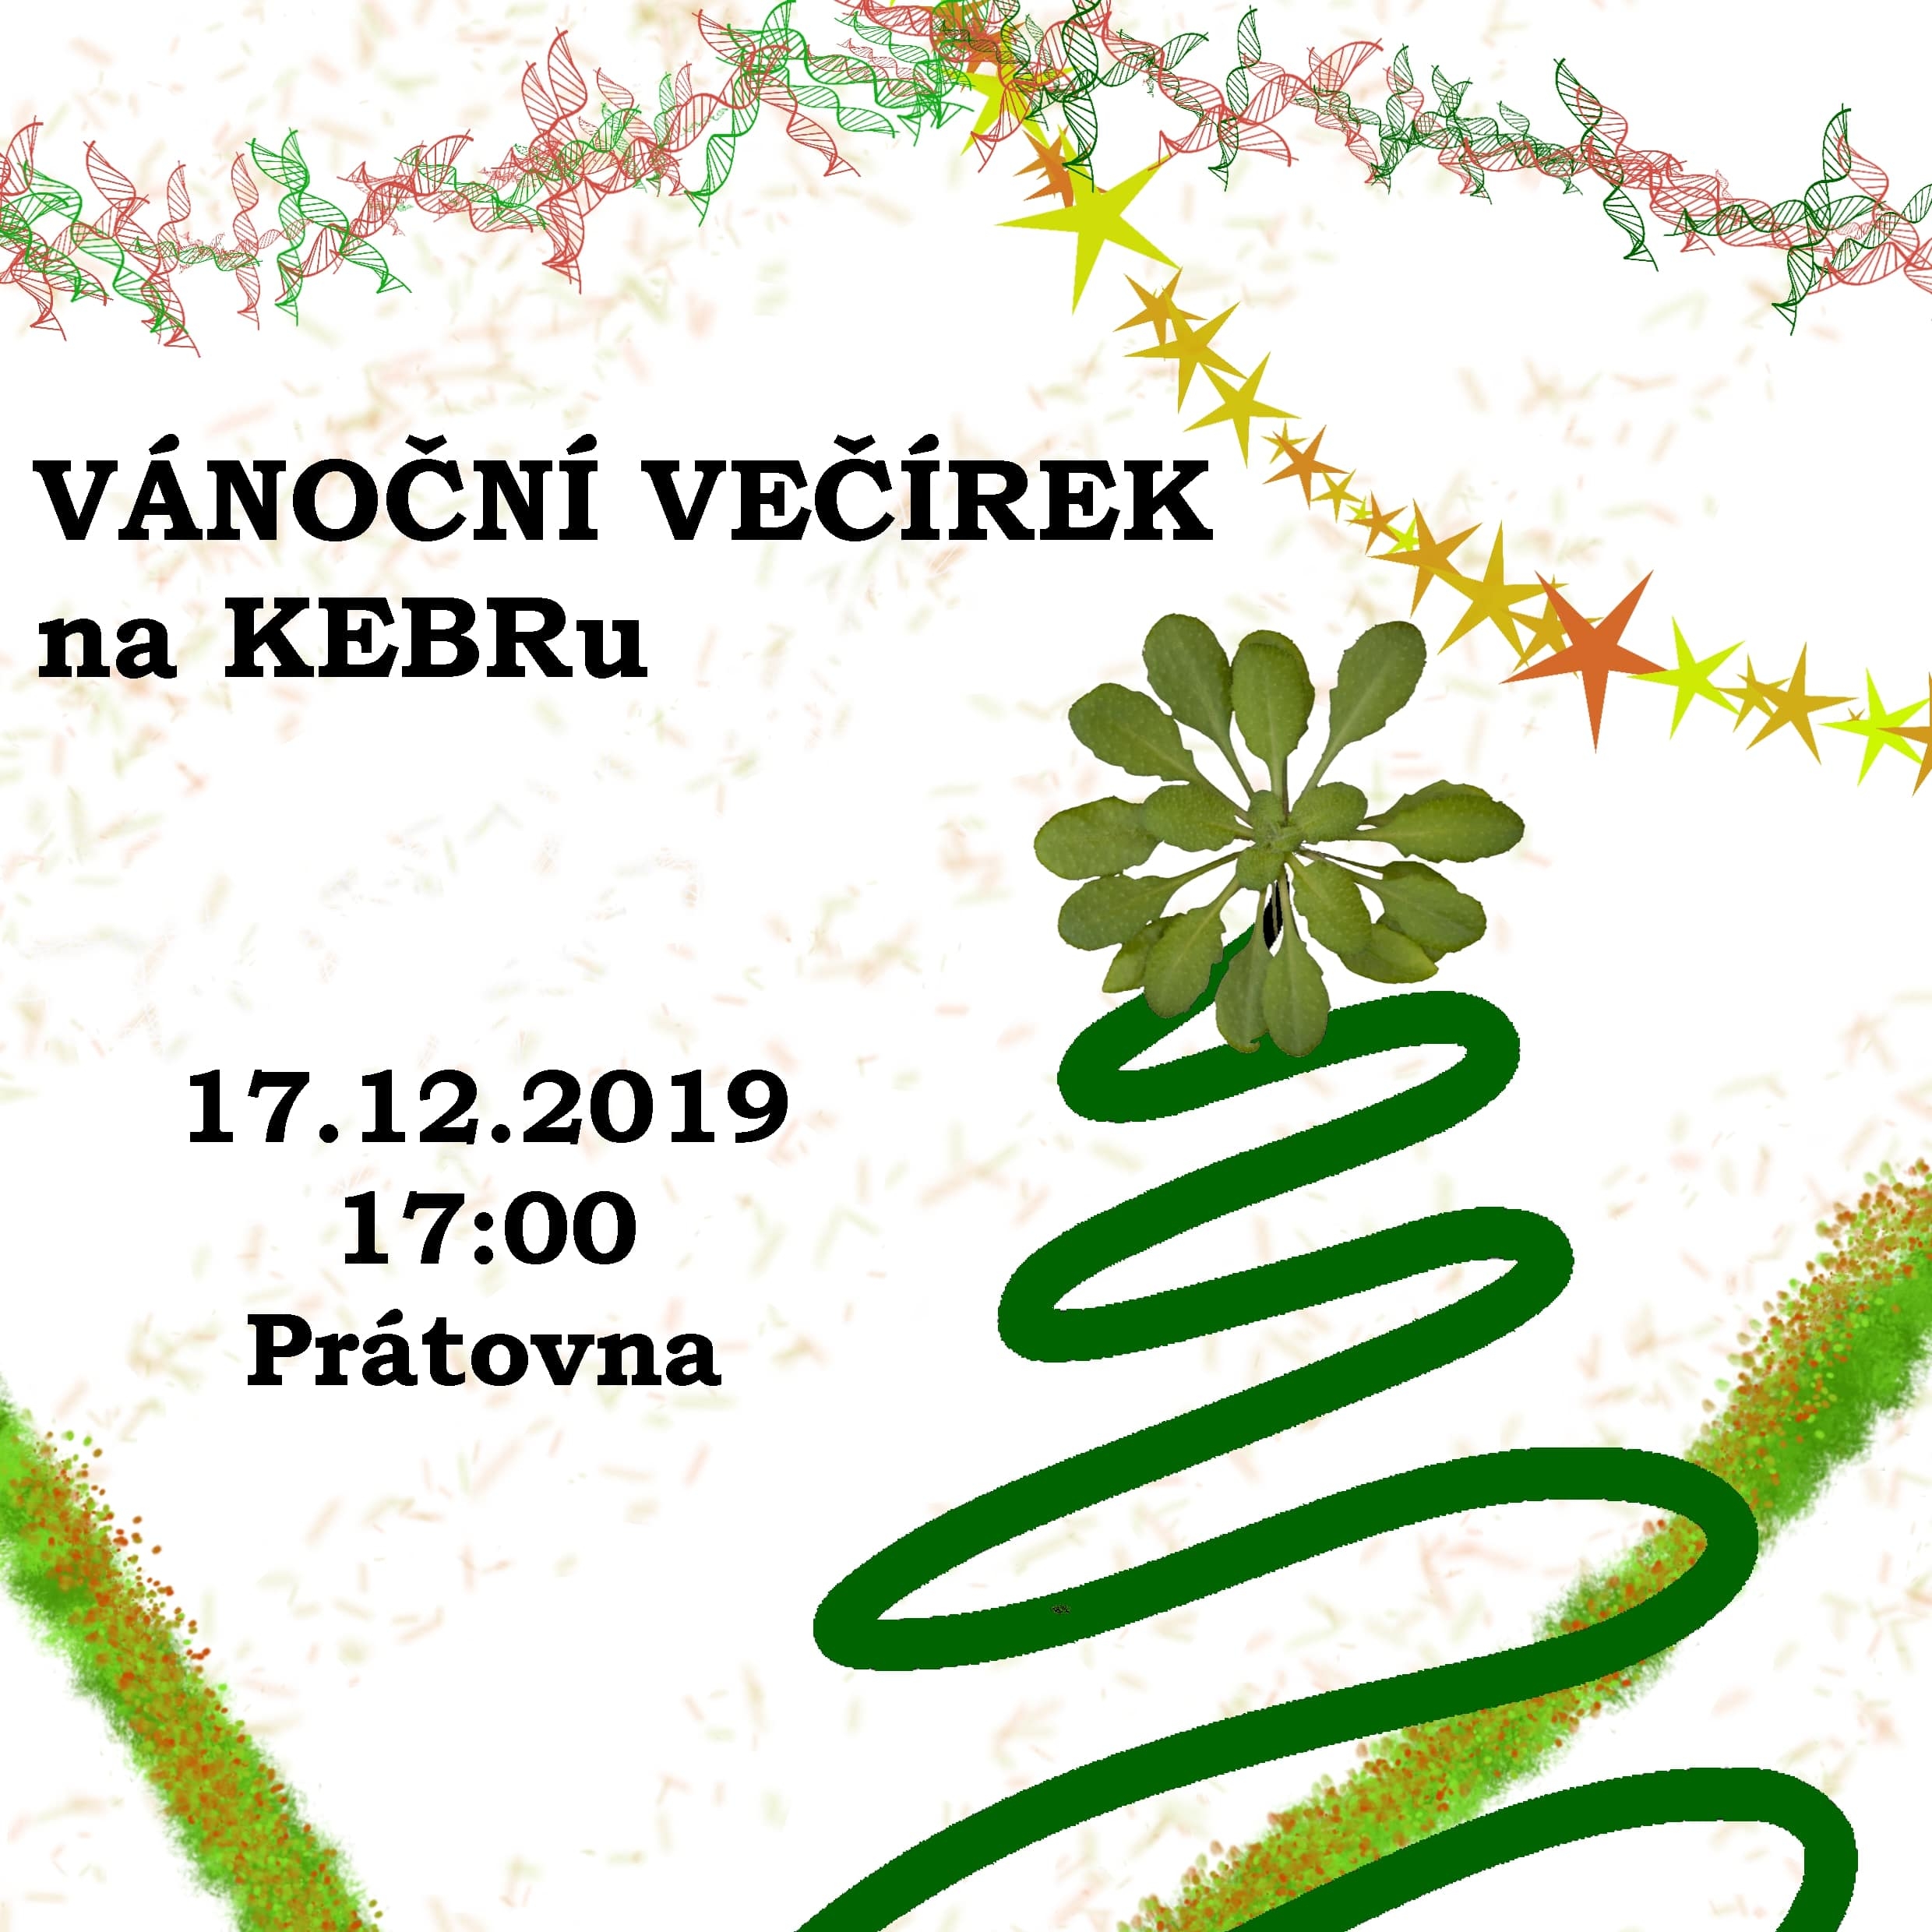 Vanocni_vecirek_2019_sq.jpg